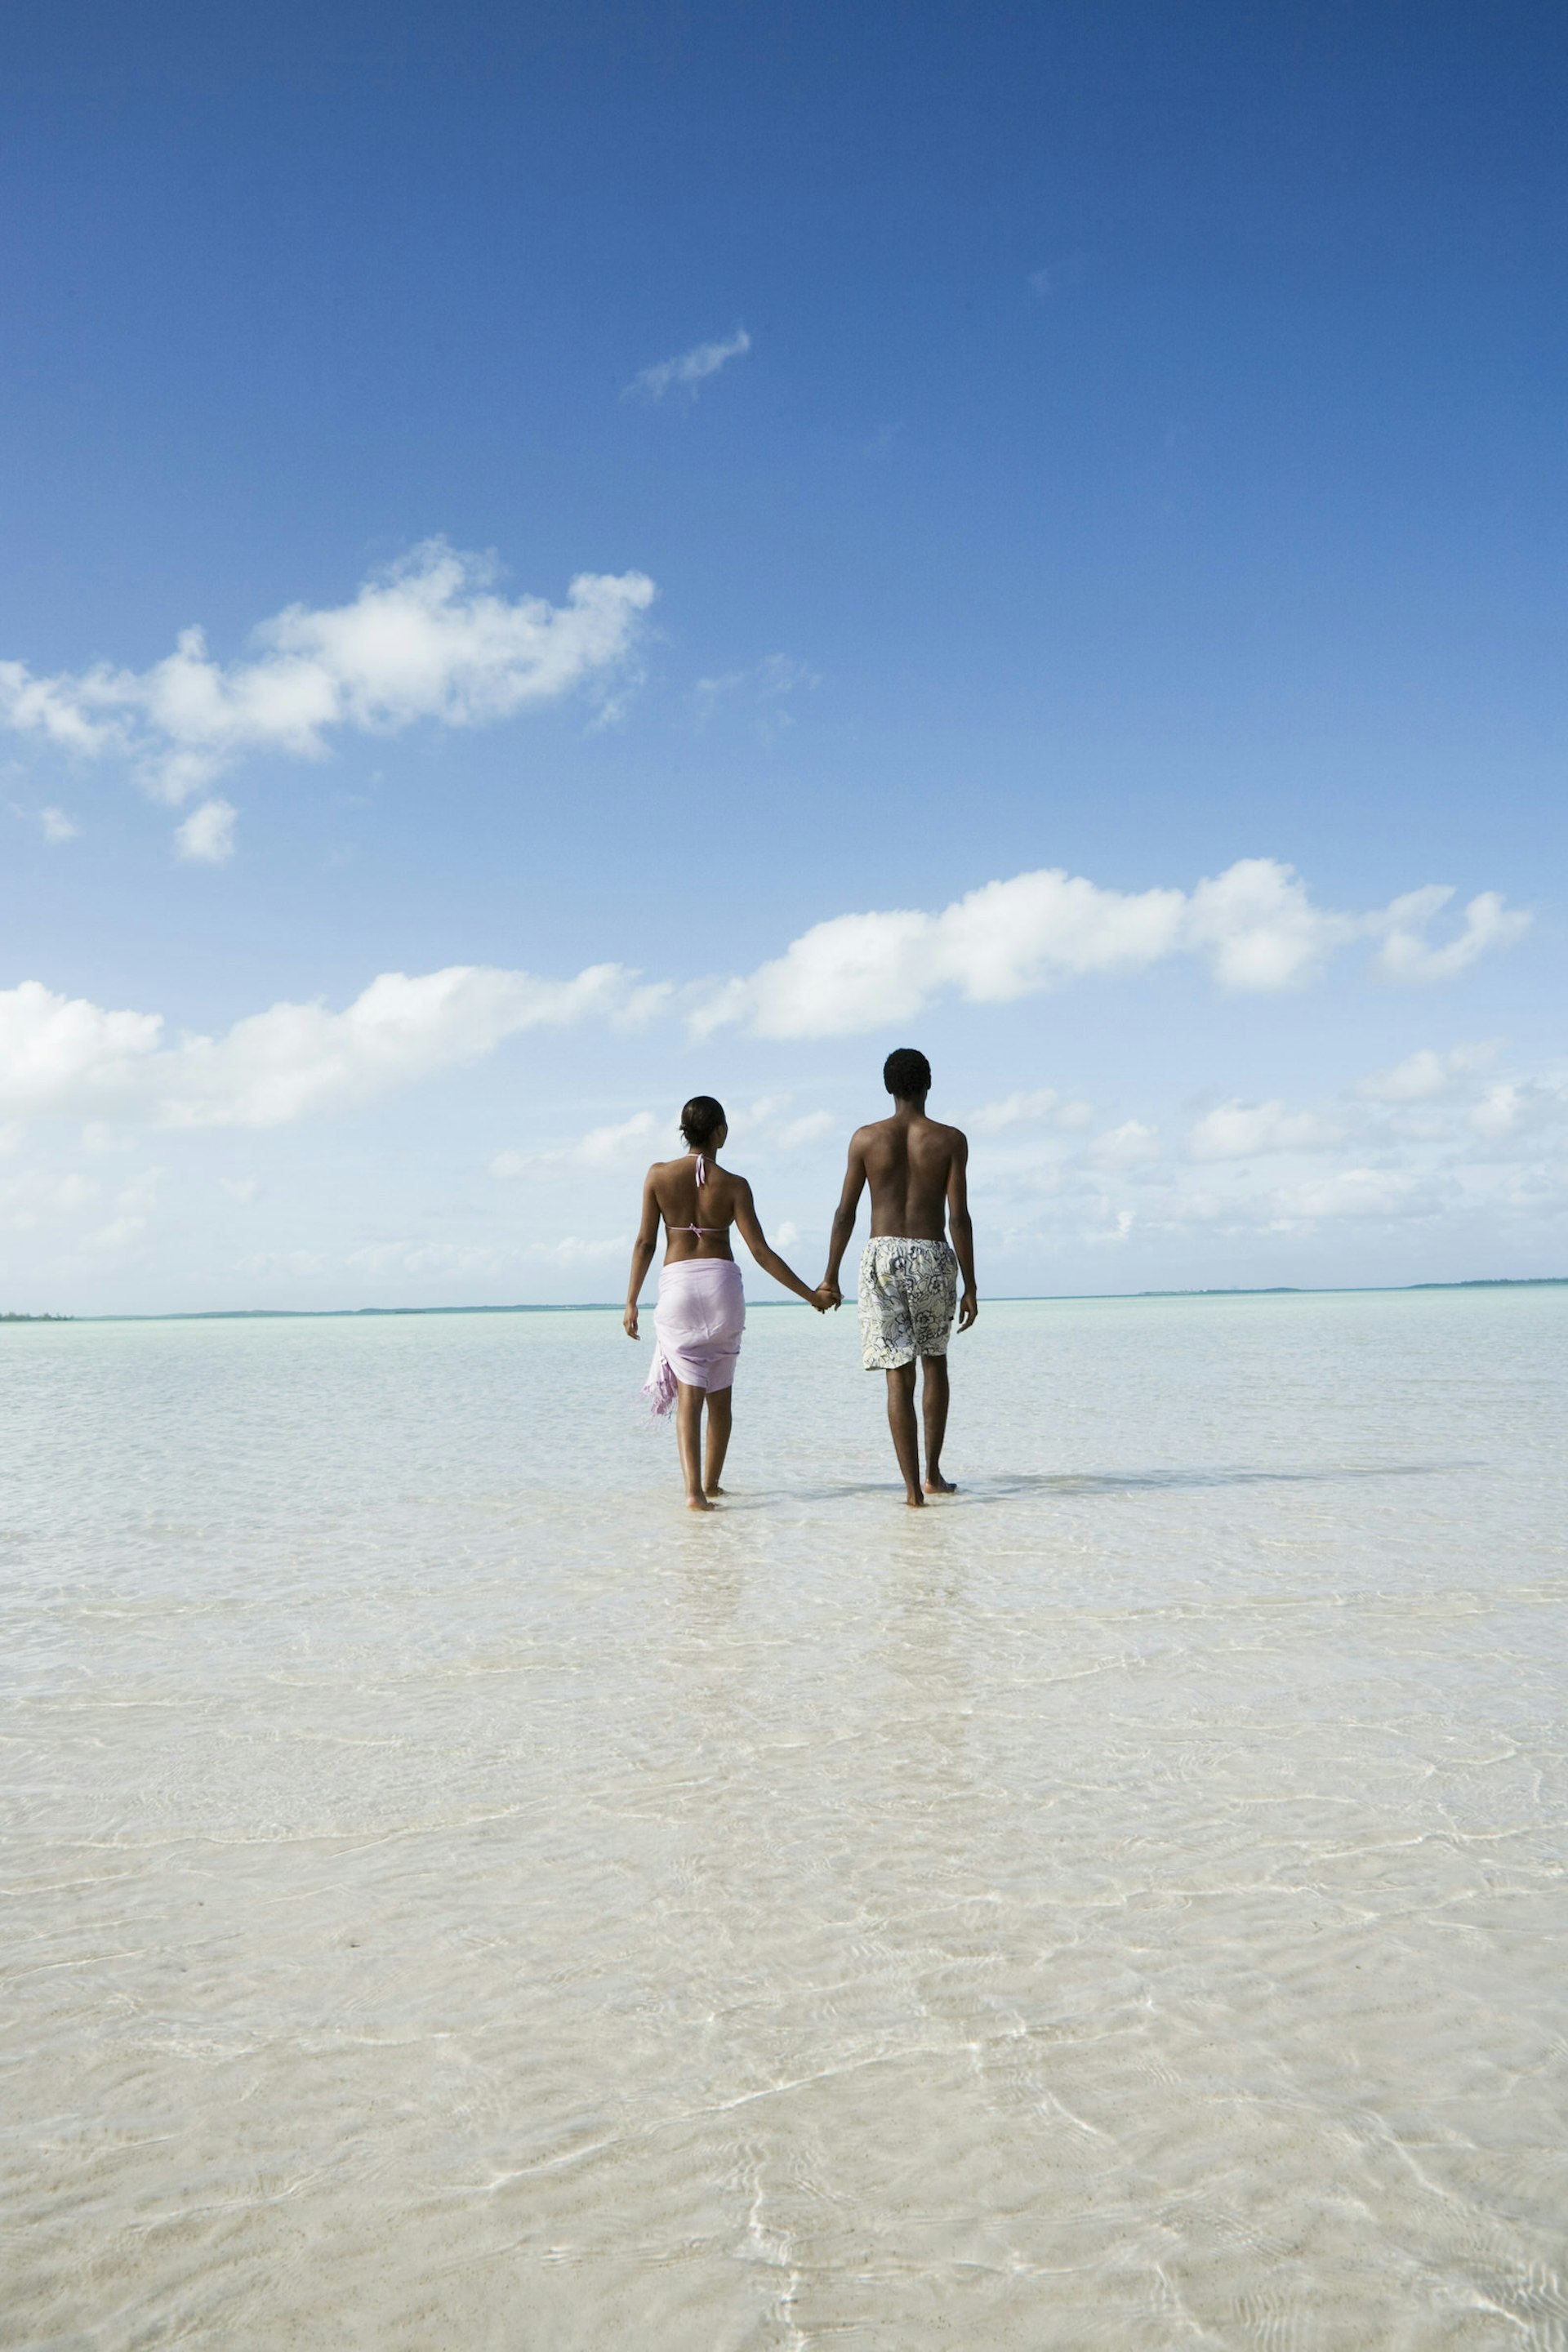 wedding anniversary trip ideas - A couple walk in the ocean shallows under a blue sky, Bahamas.